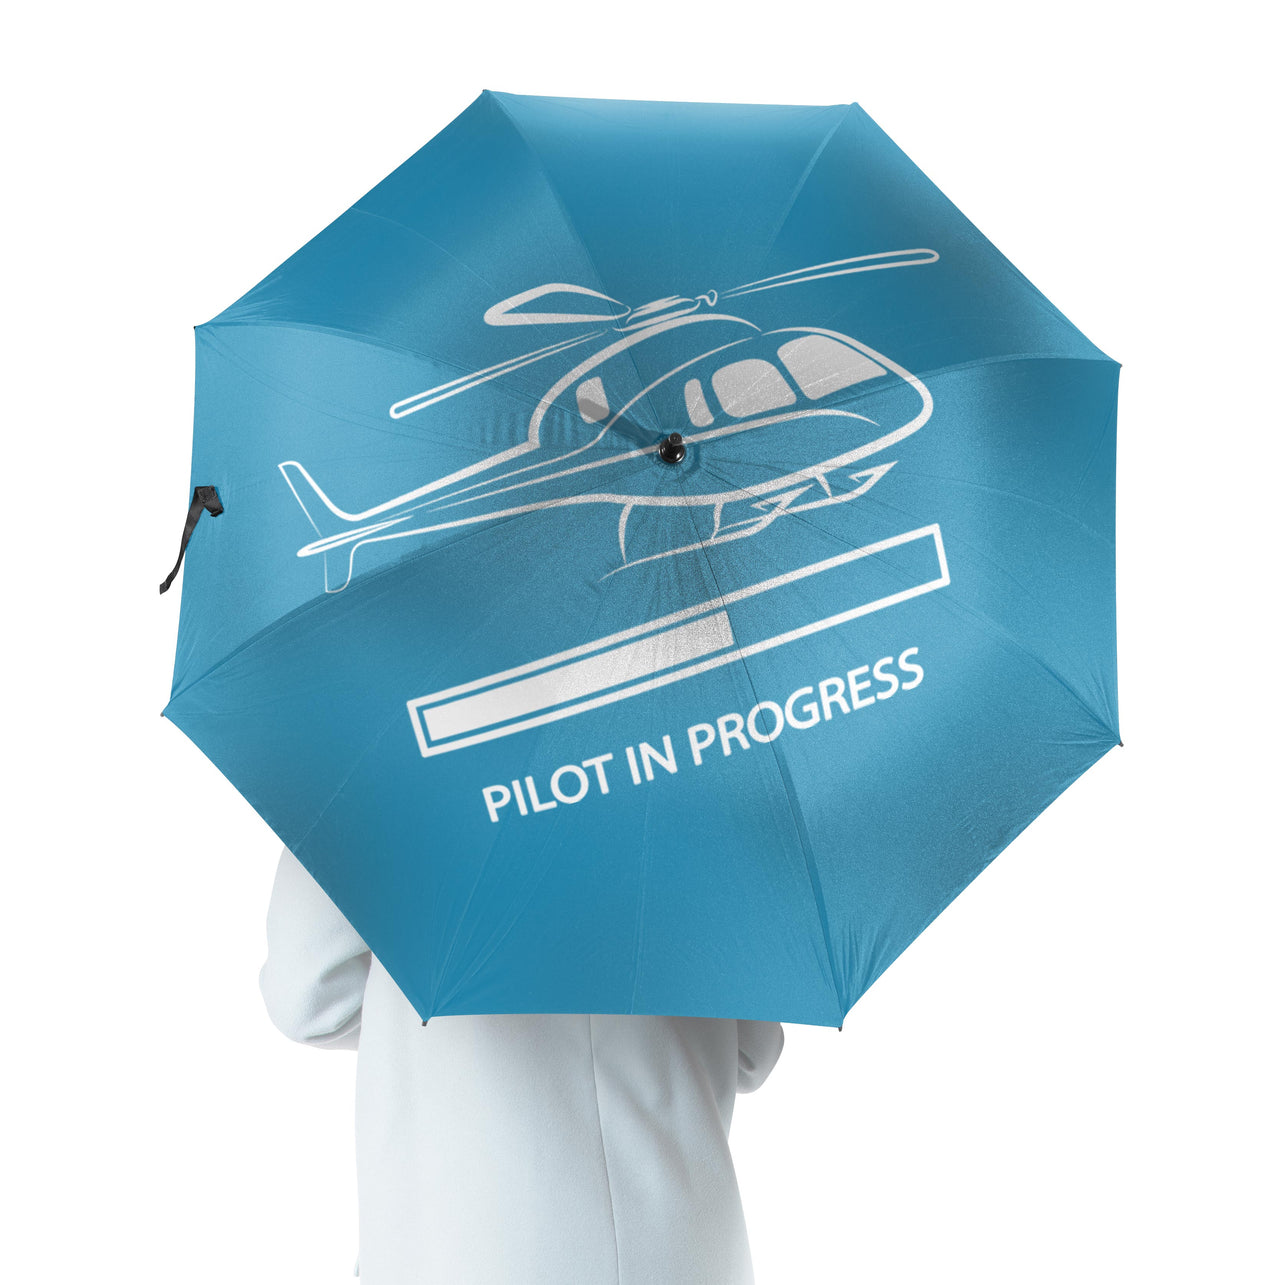 Pilot In Progress (Helicopter) Designed Umbrella